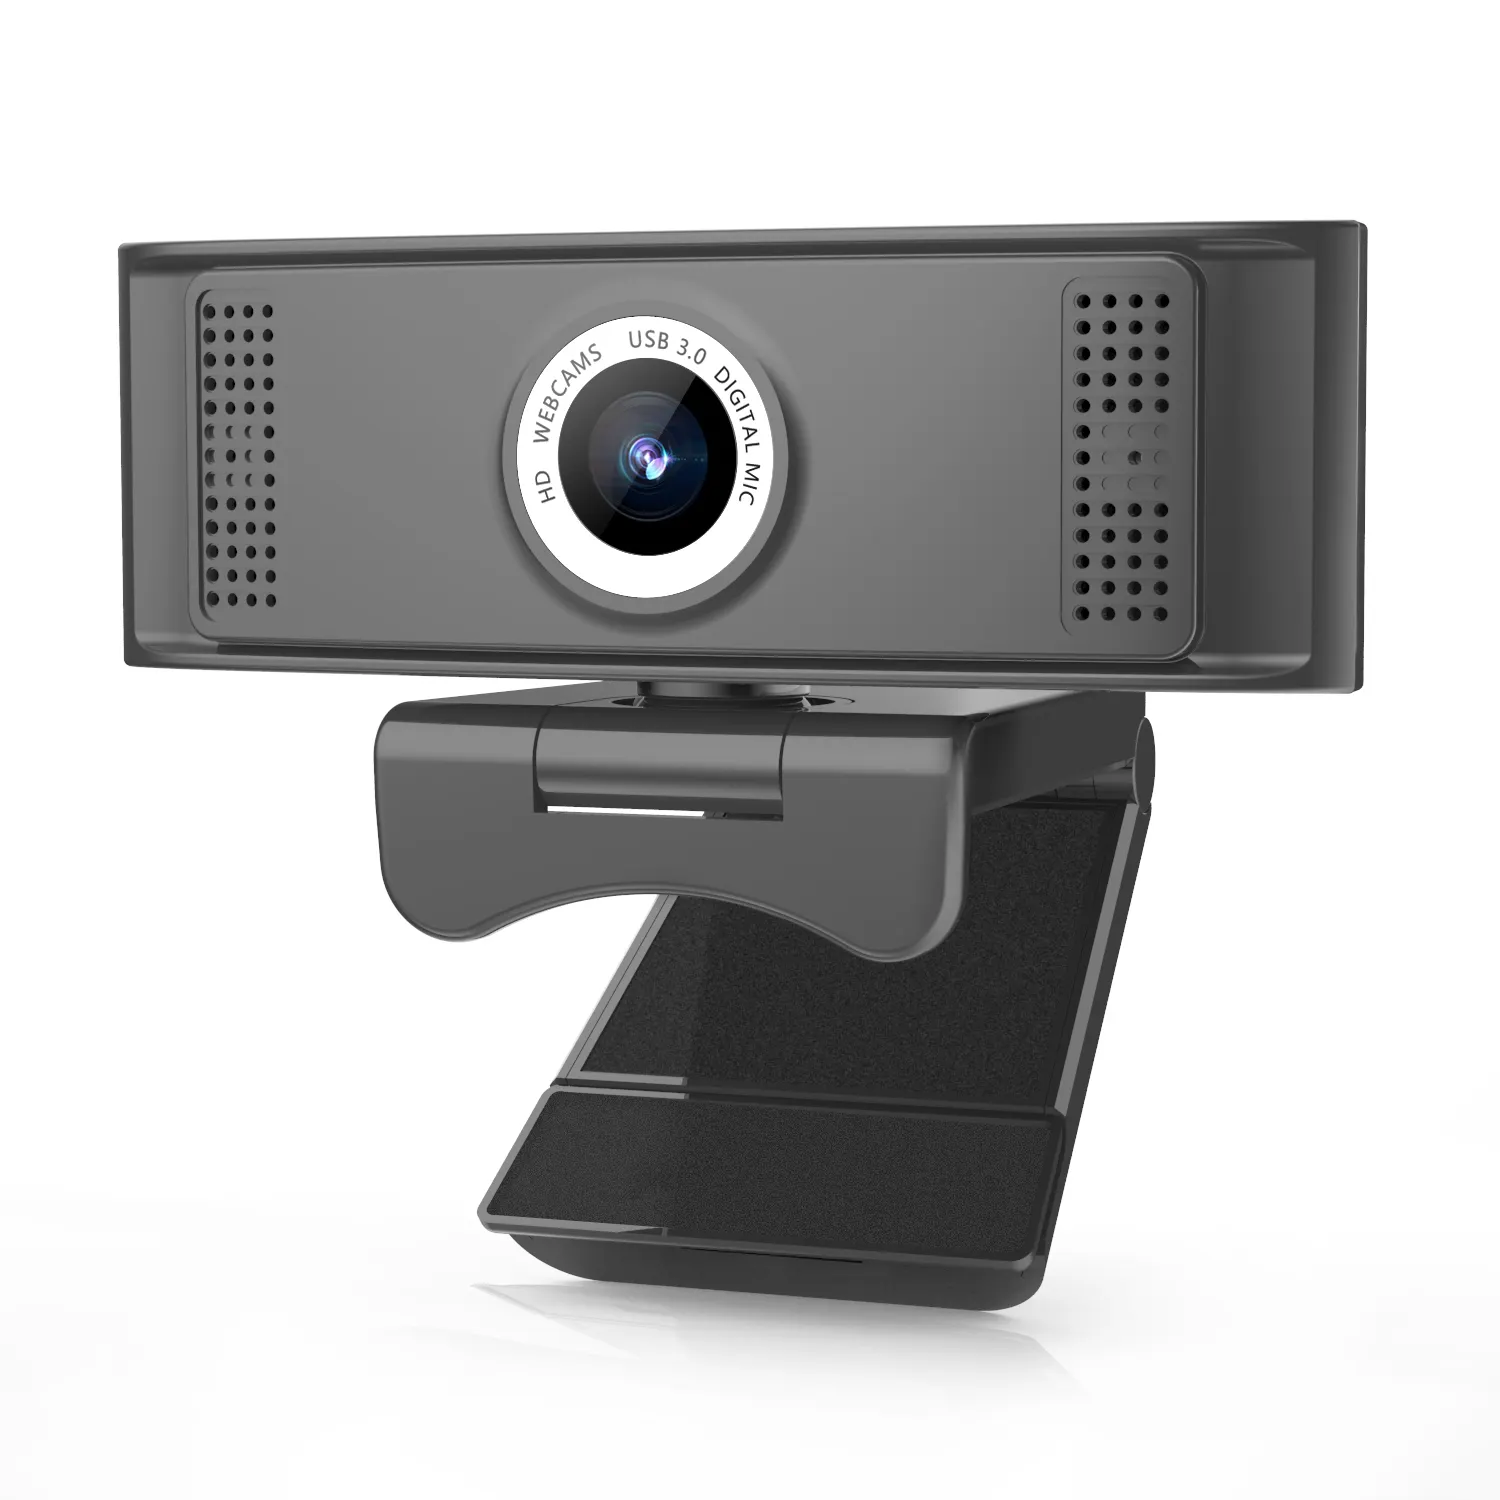 INGSCREEN kamera web USB 2.0 dengan Remote Control, kamera konferensi Video IP dengan Remote Control